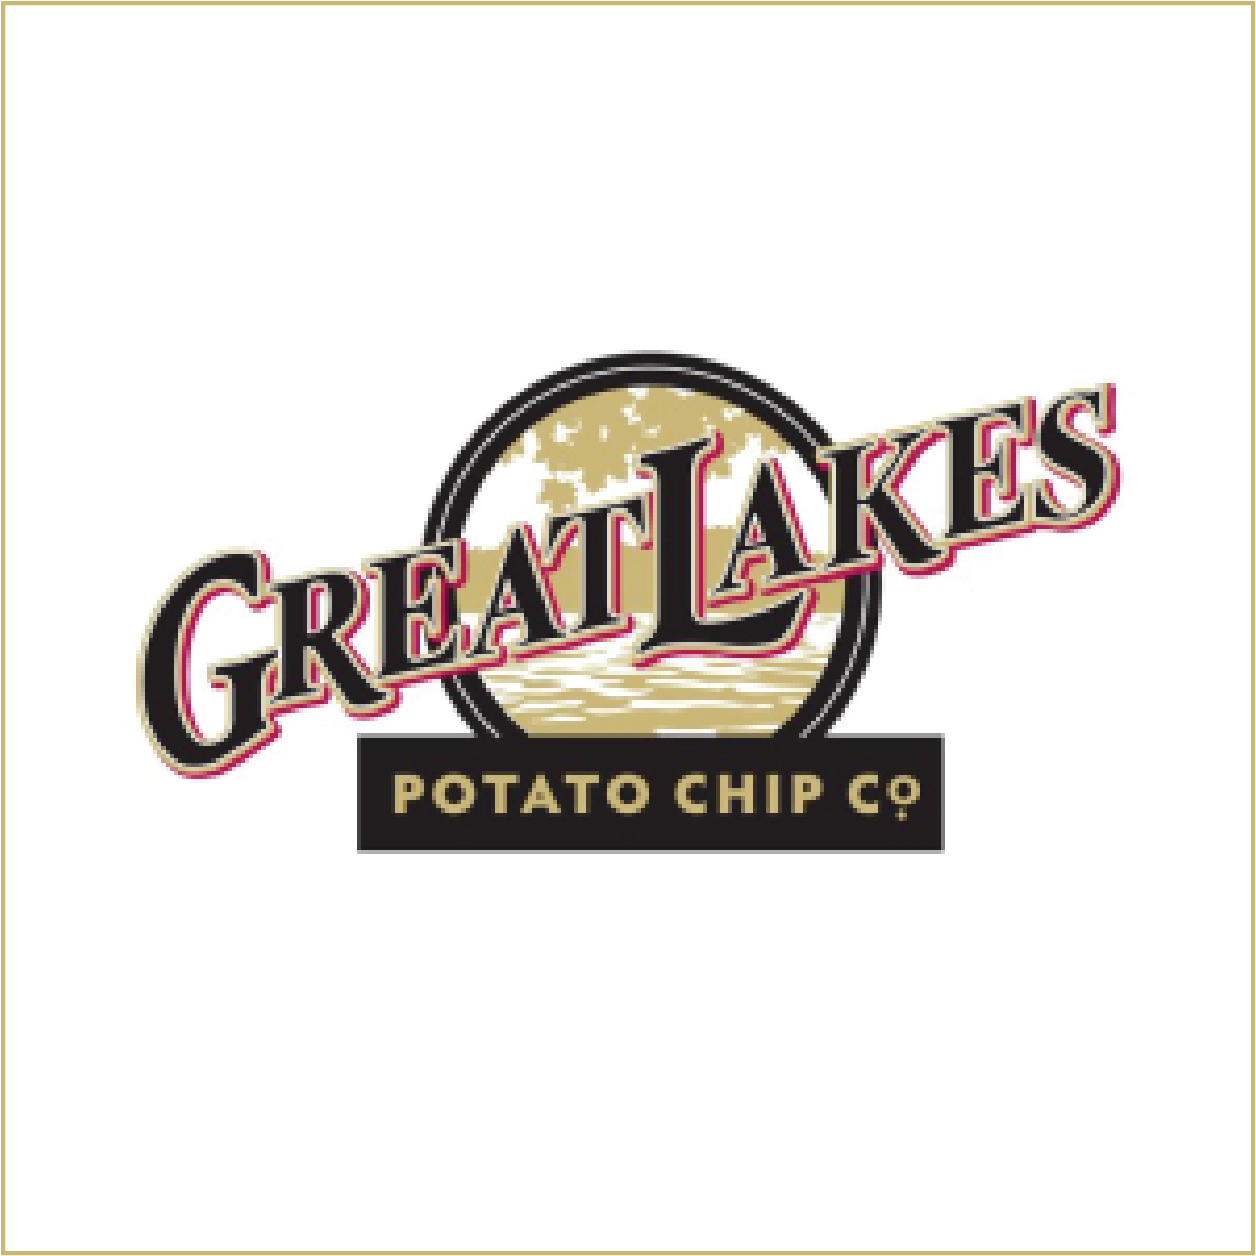 Great Lakes Potato Chip